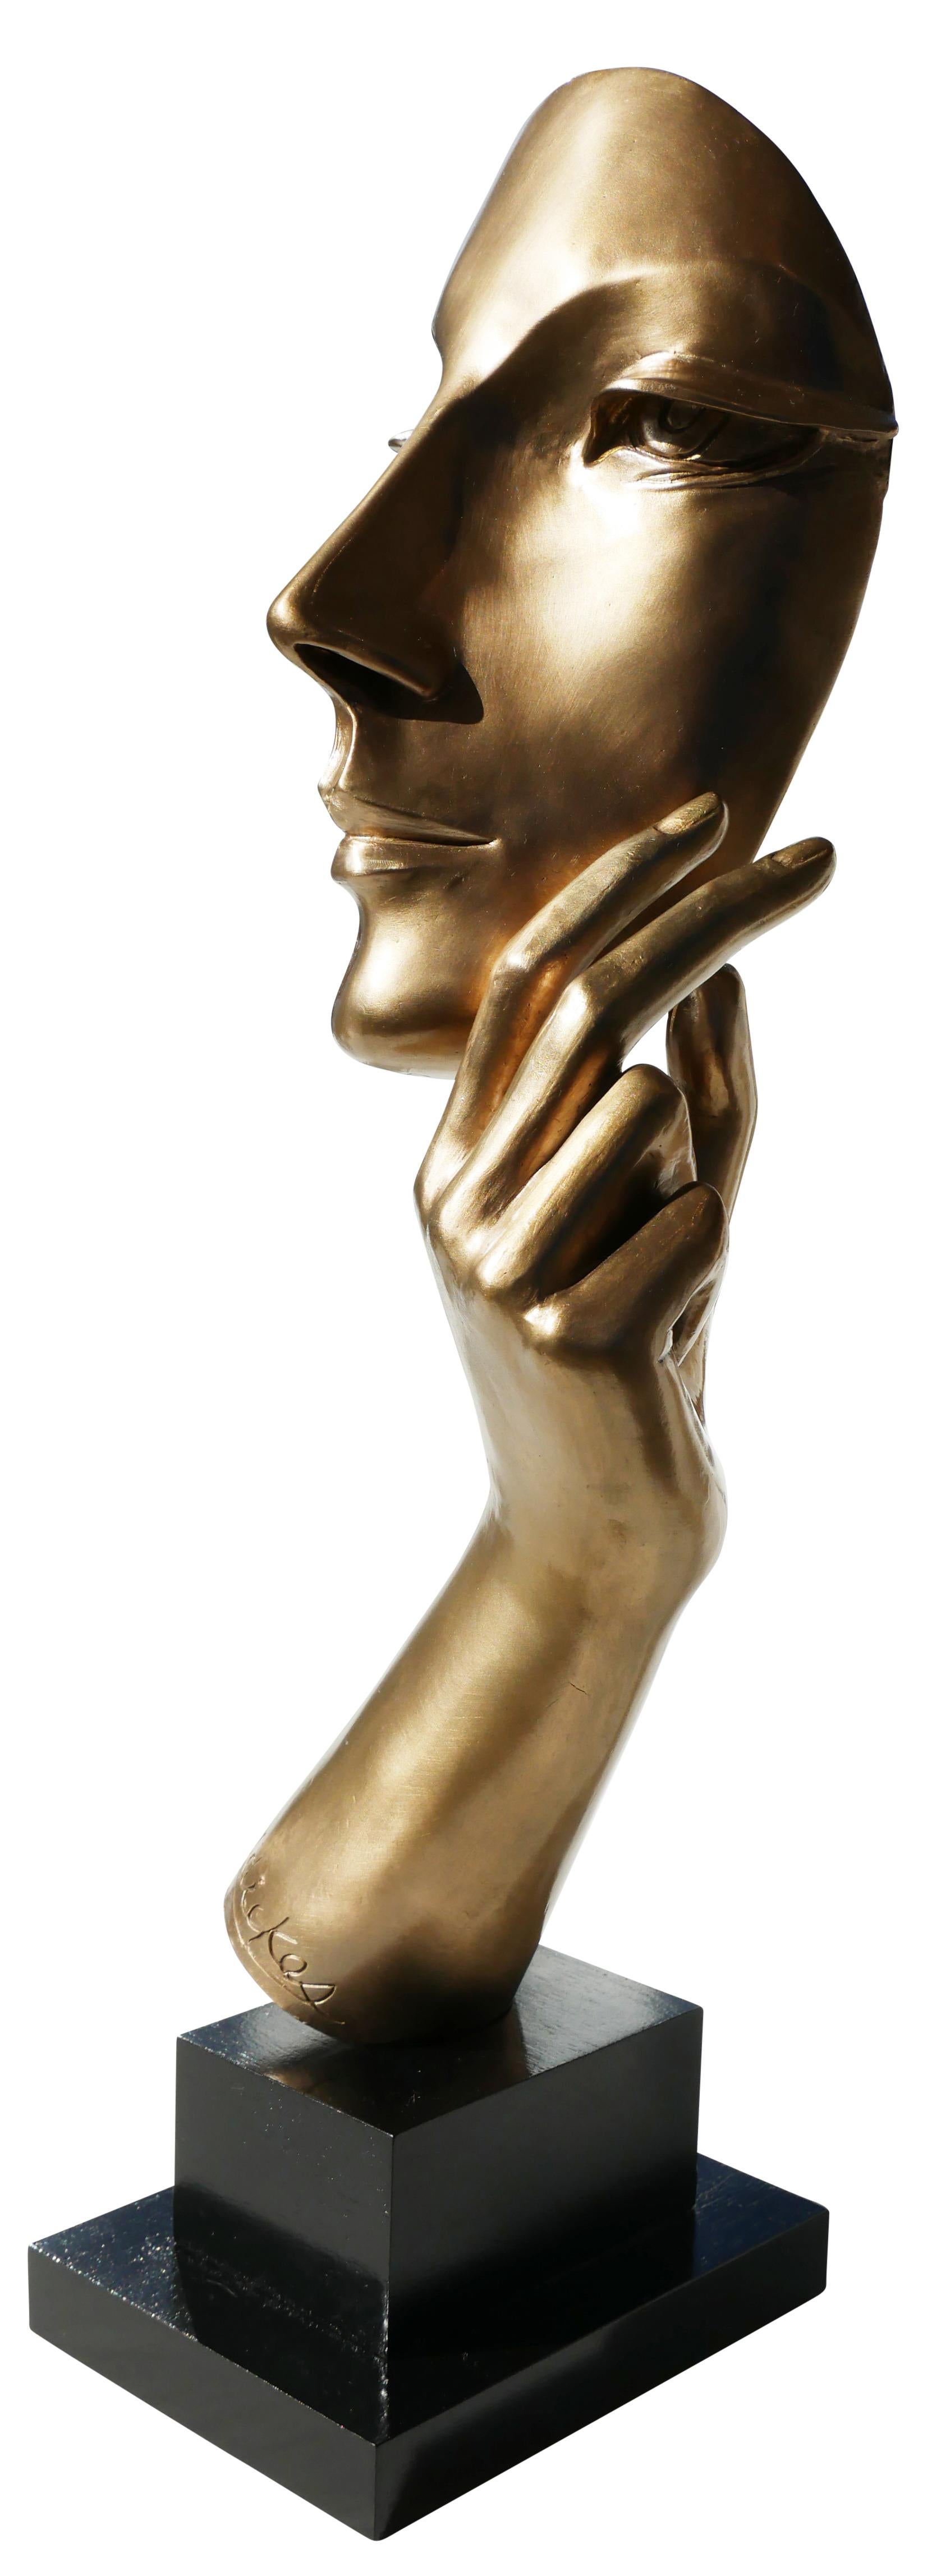 Face féminine moderniste abstraite avec bras sculpté en bronze - Sculpture de David Adickes